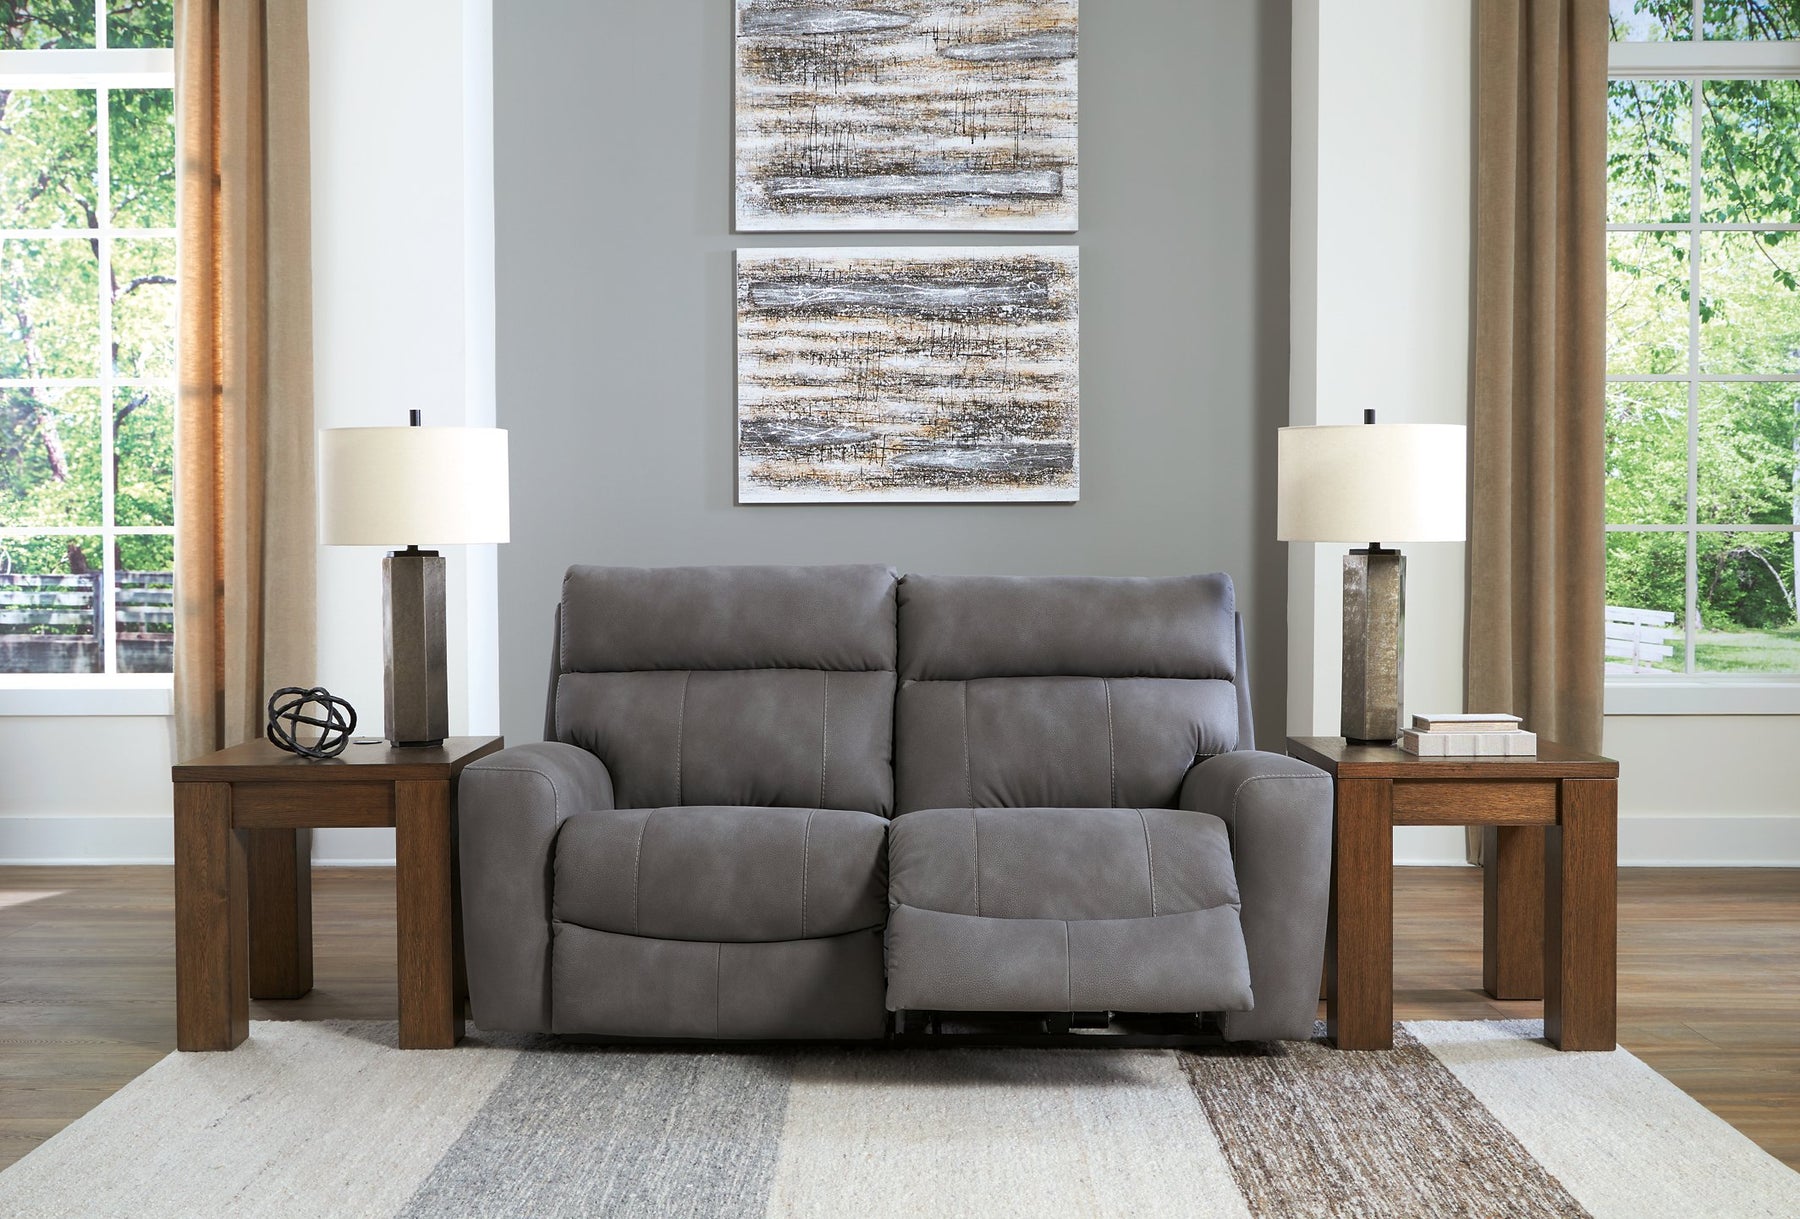 Next-Gen DuraPella Power Reclining Sectional Loveseat - Half Price Furniture